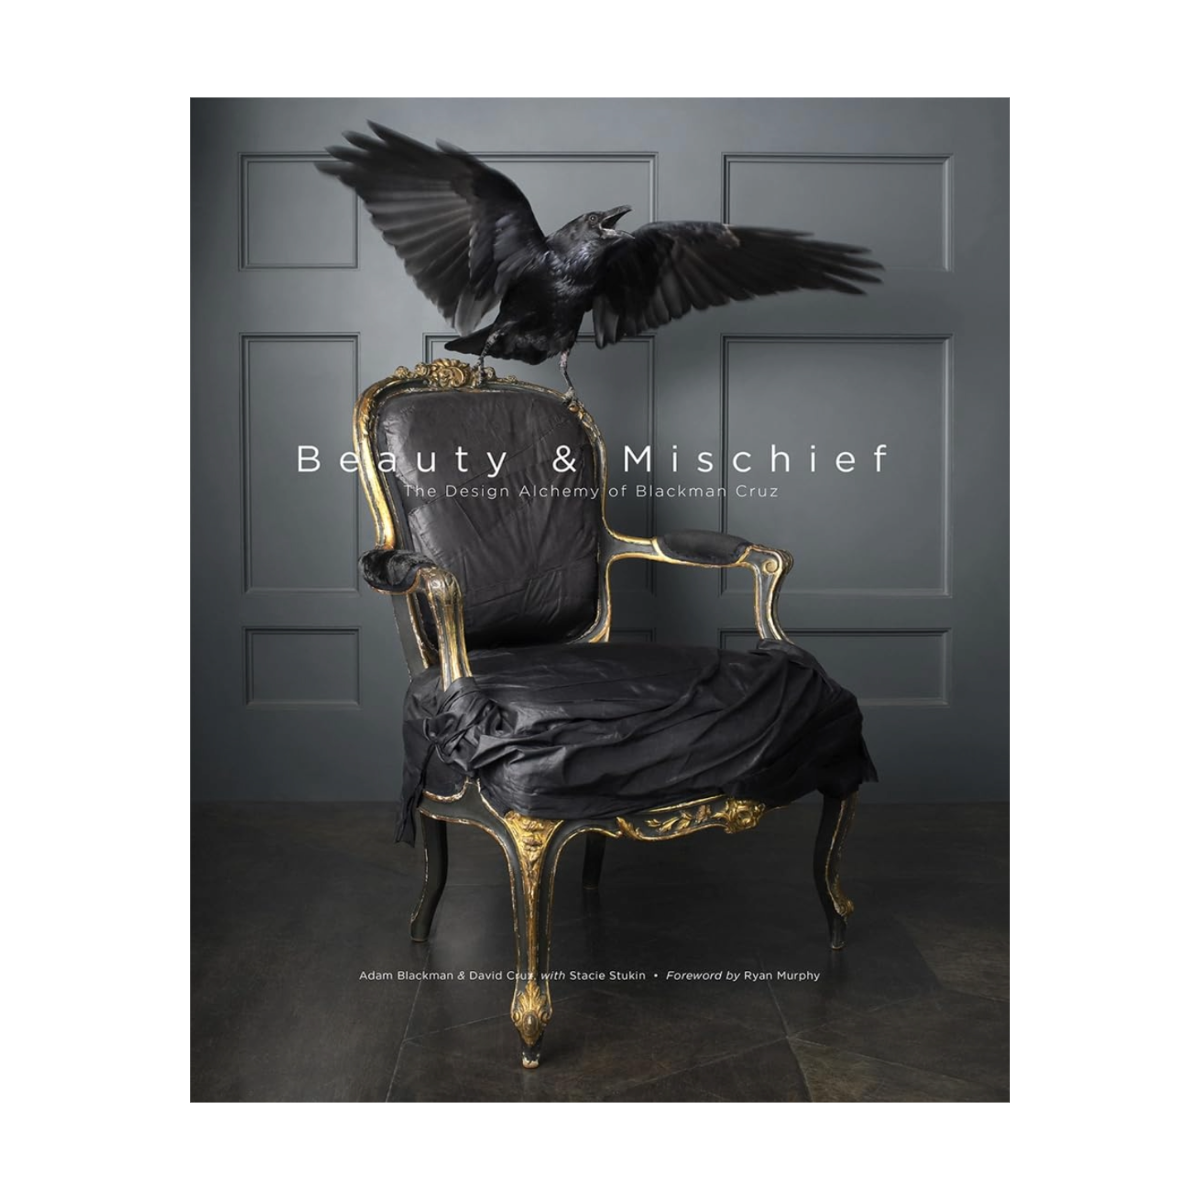 Beauty & Mischief by Stacie Stukin, Adam Blackman, and David Cruz